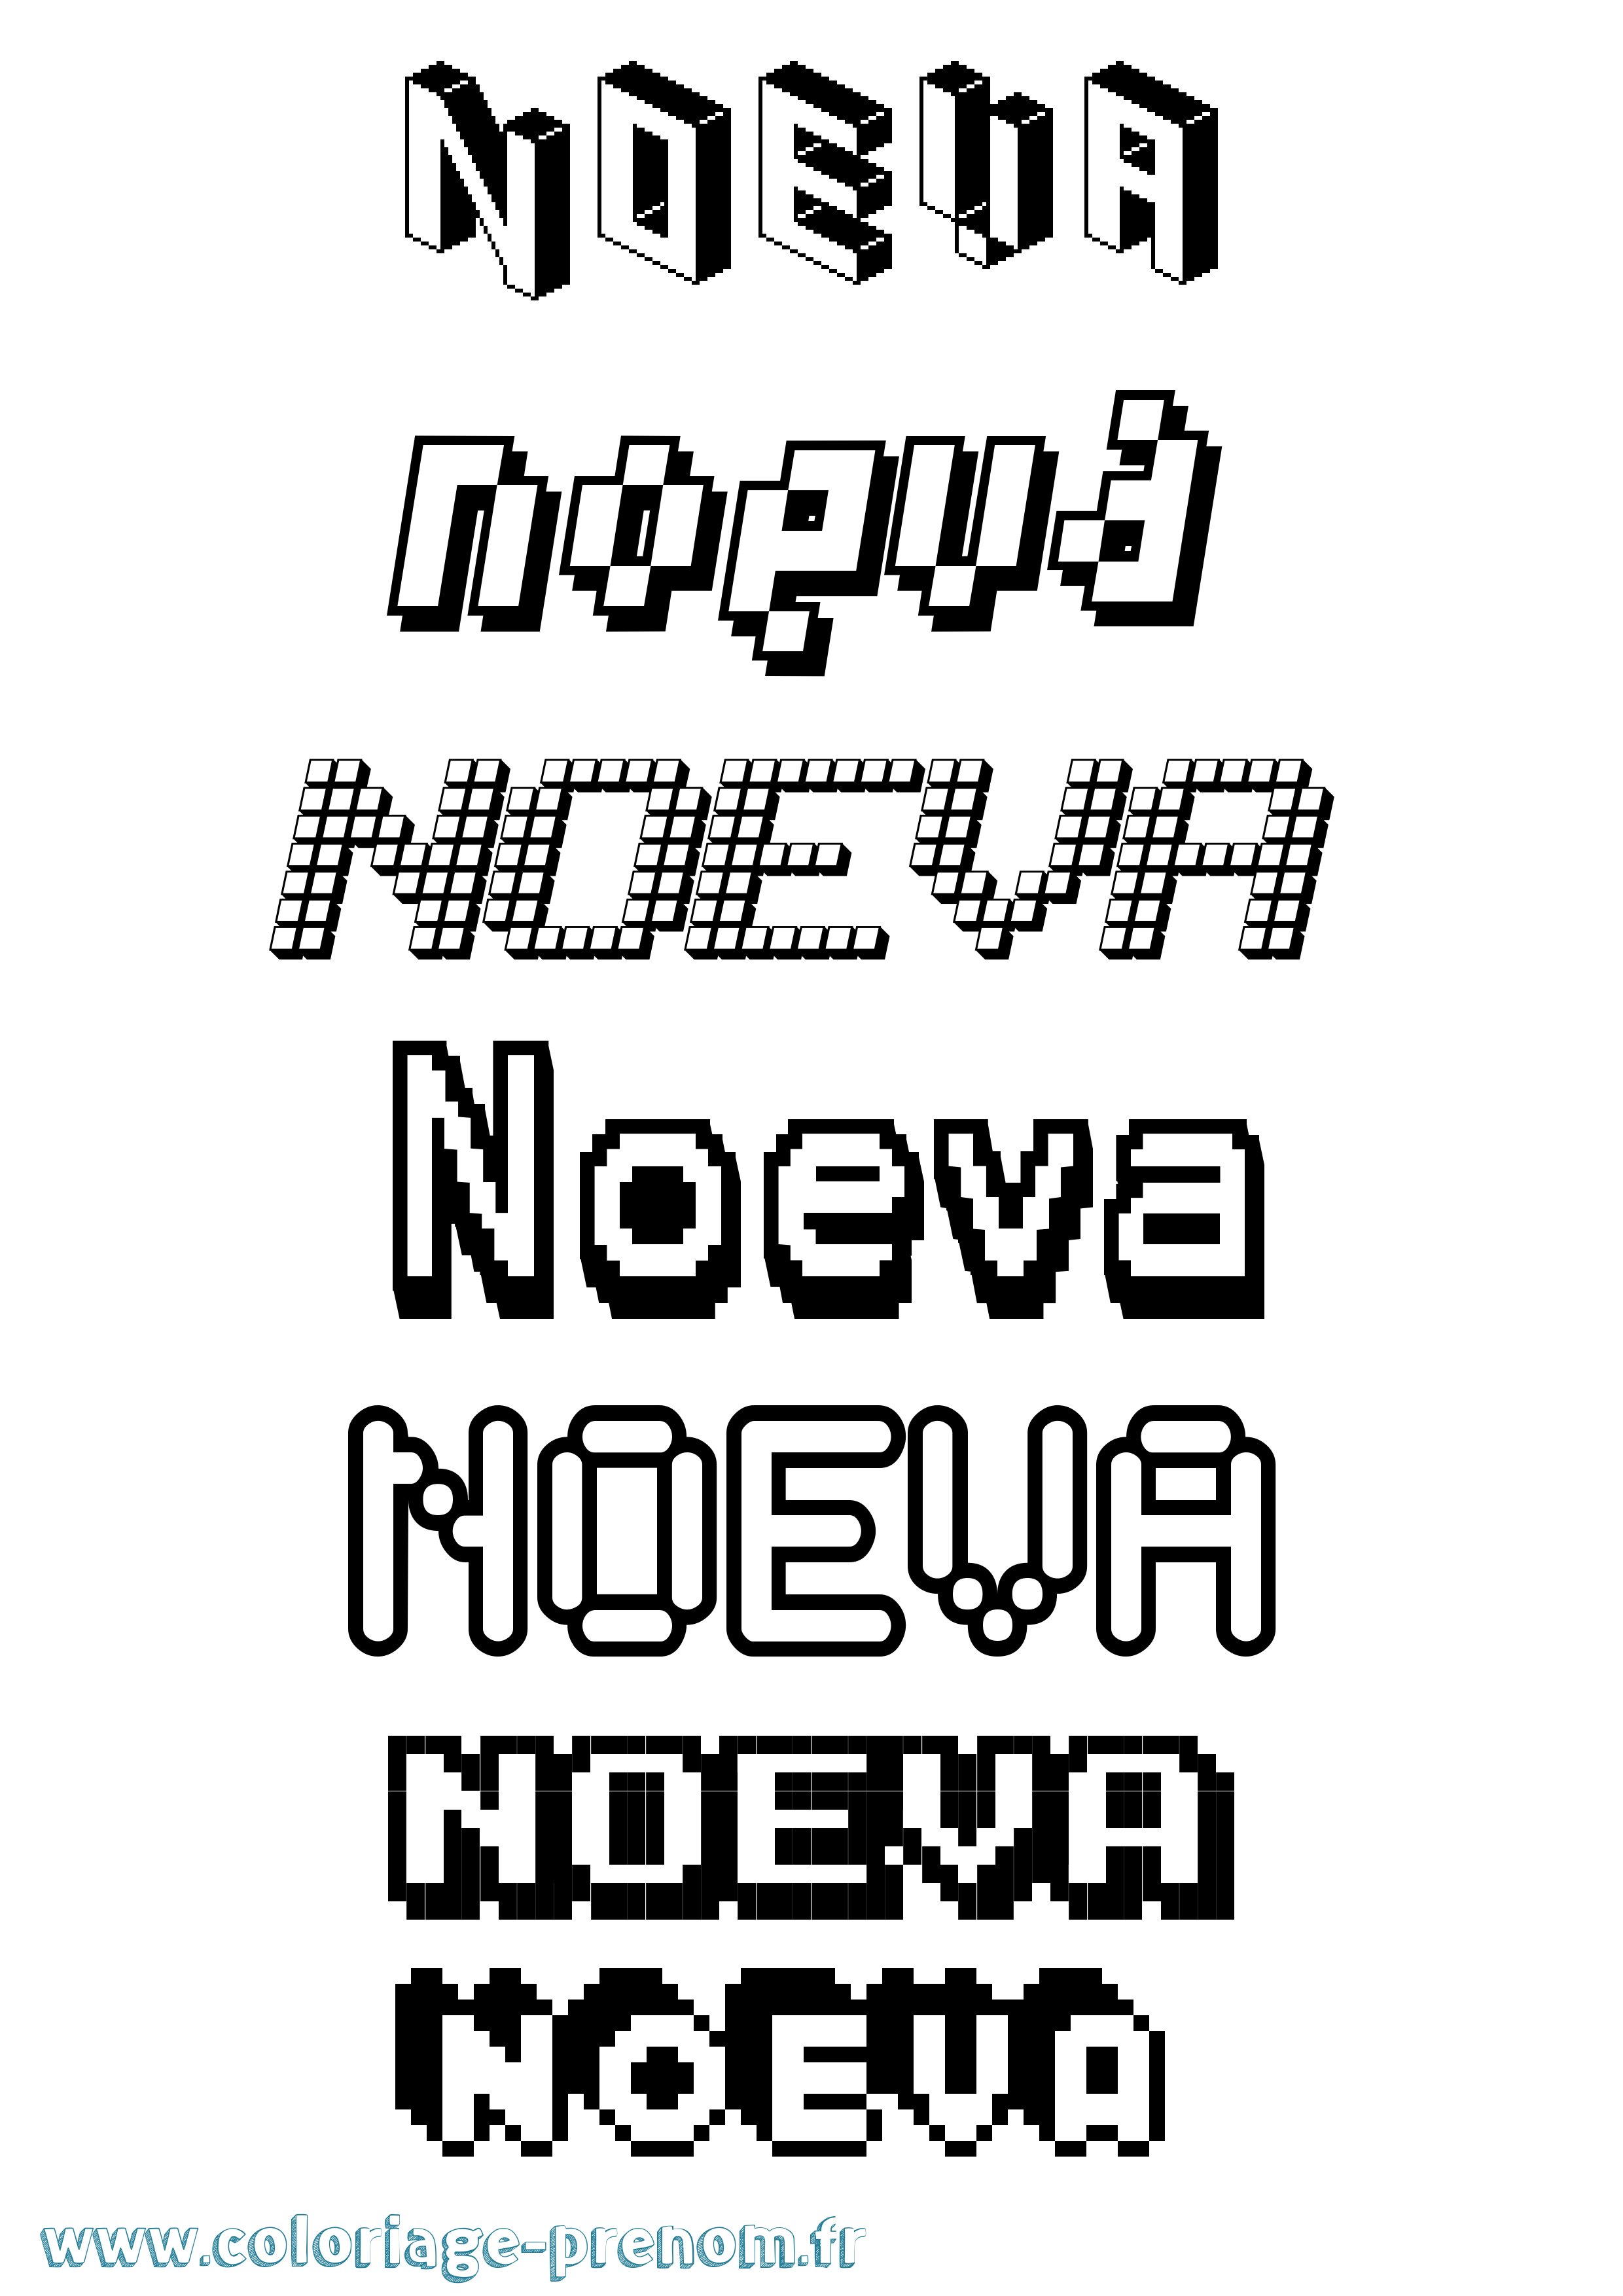 Coloriage prénom Noeva Pixel